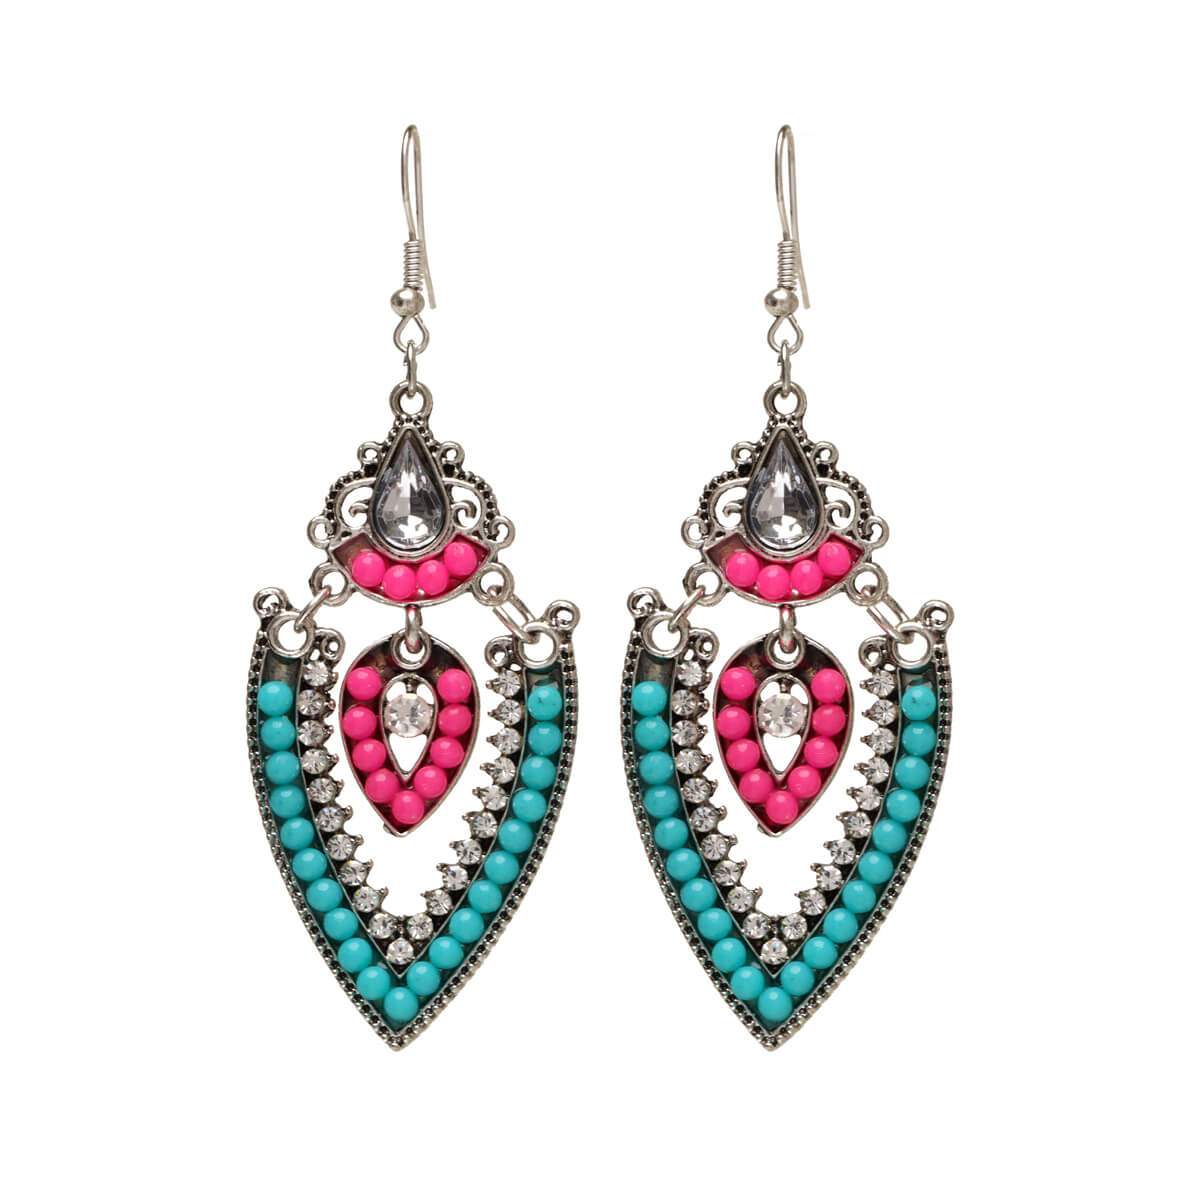 Multicolored hanging earrings